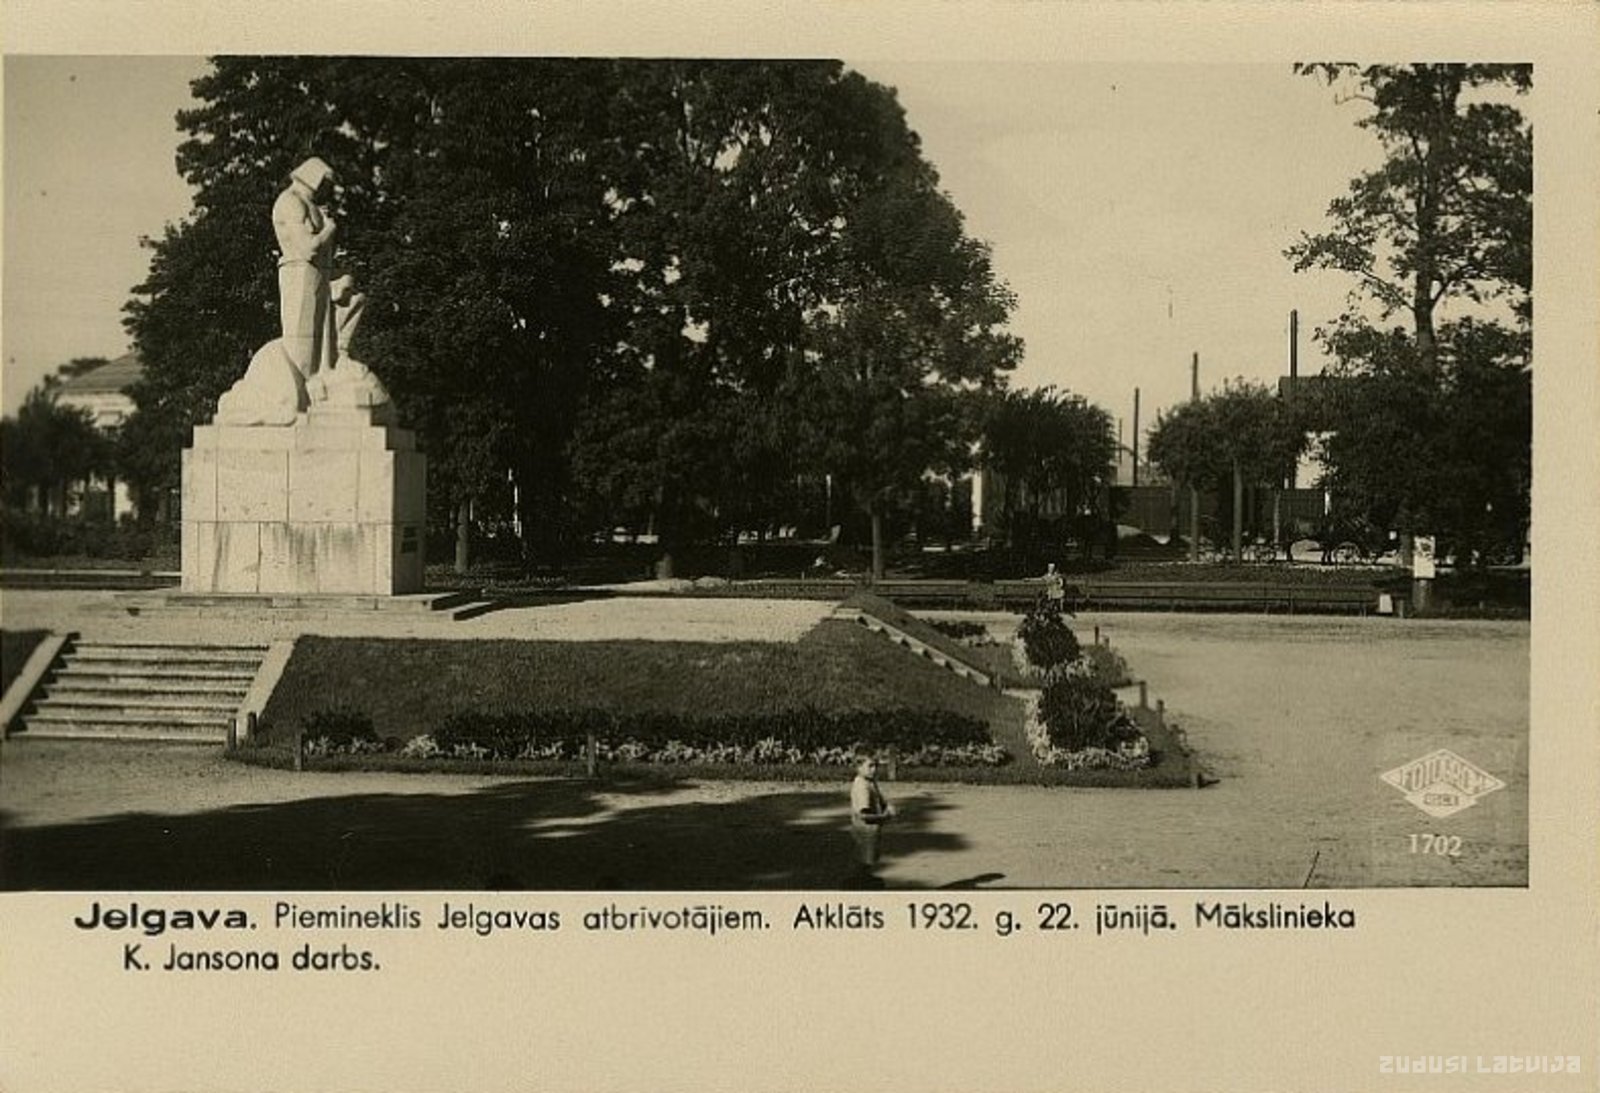 Jelgava. Monument for Jelgava liberators